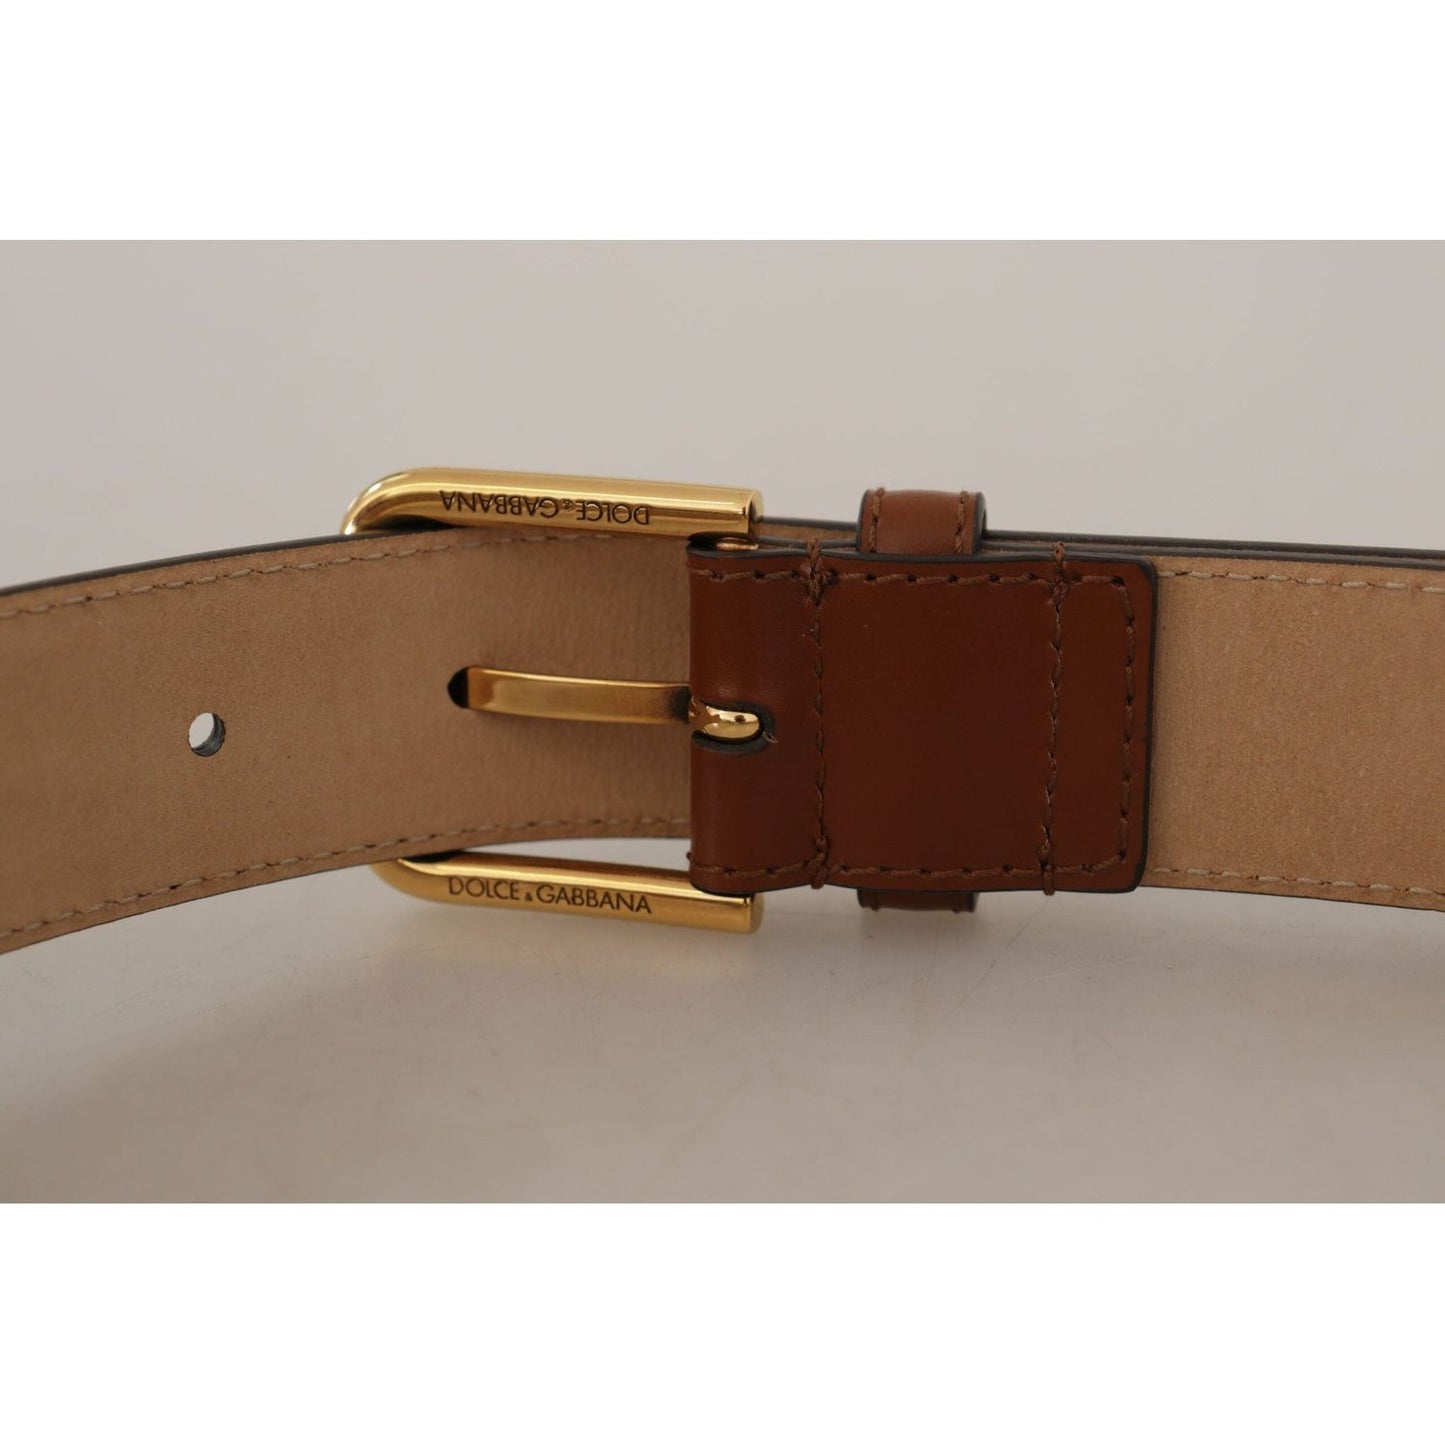 Dolce & Gabbana Elegant Leather Belt with Engraved Buckle brown-leather-polished-gold-metal-waist-buckle-belt IMG_8953-scaled-e6784331-320.jpg